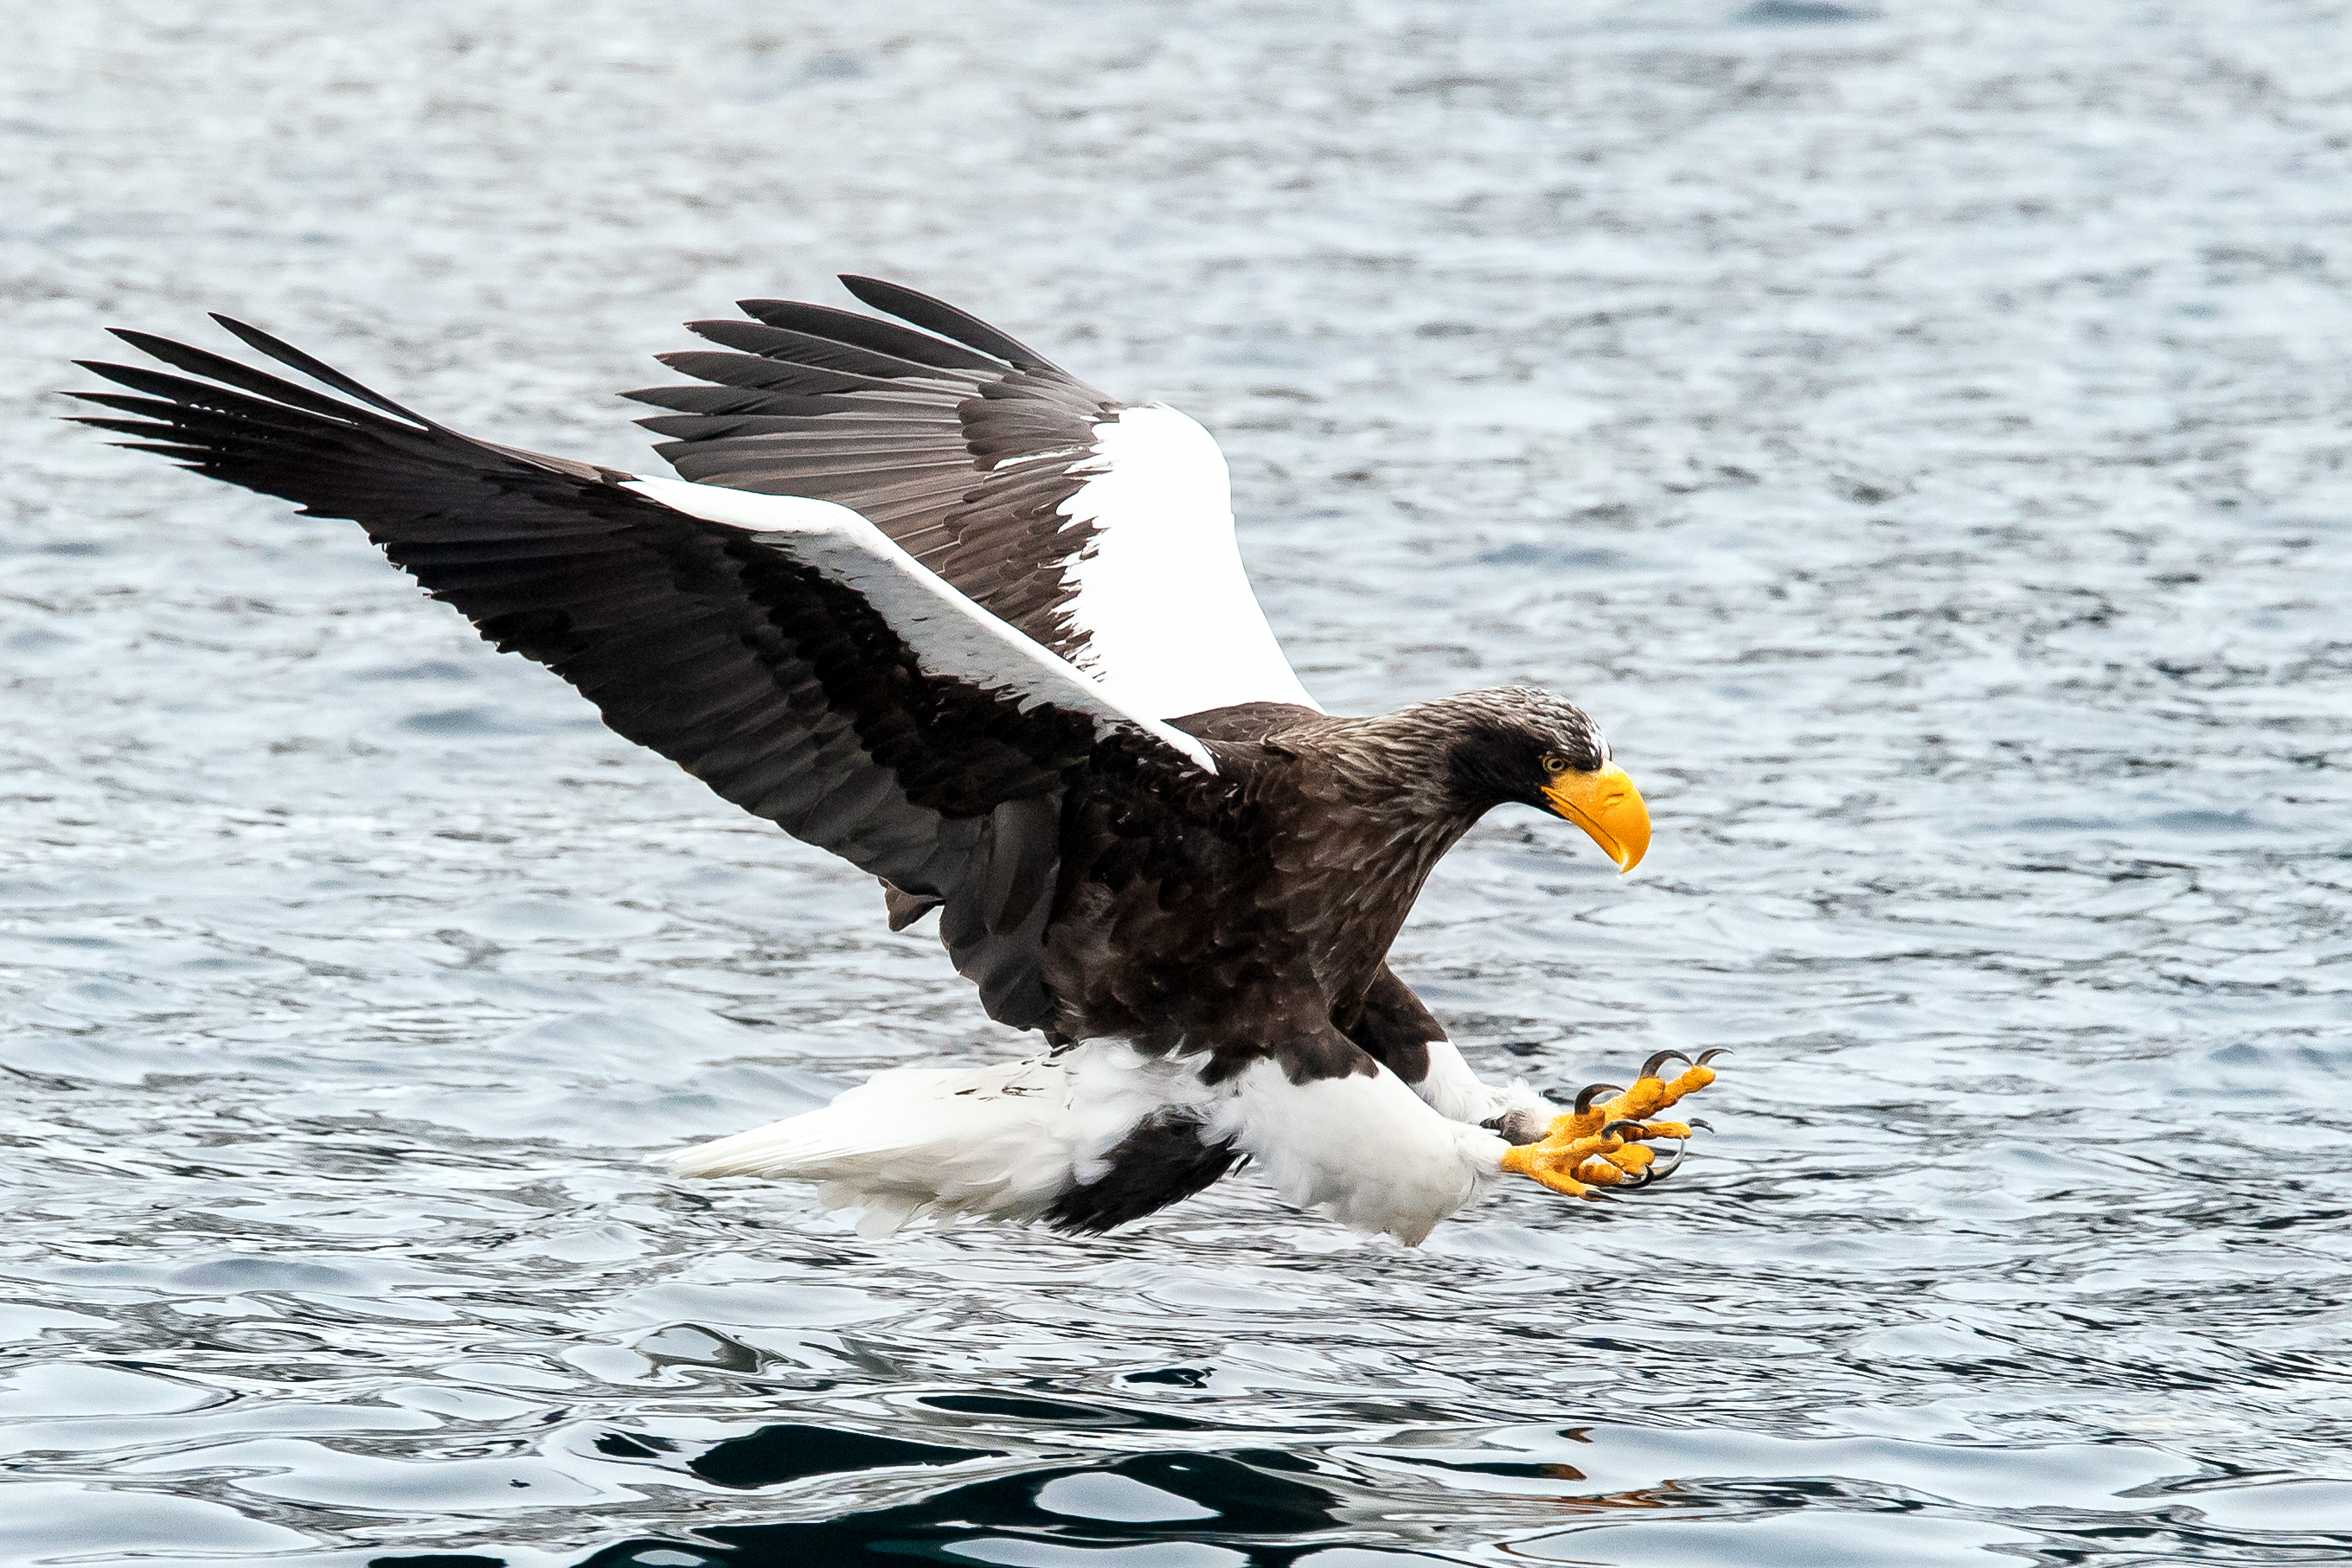 https://upload.wikimedia.org/wikipedia/commons/5/55/Adult_Steller%27s_sea_eagle_fishing.jpg